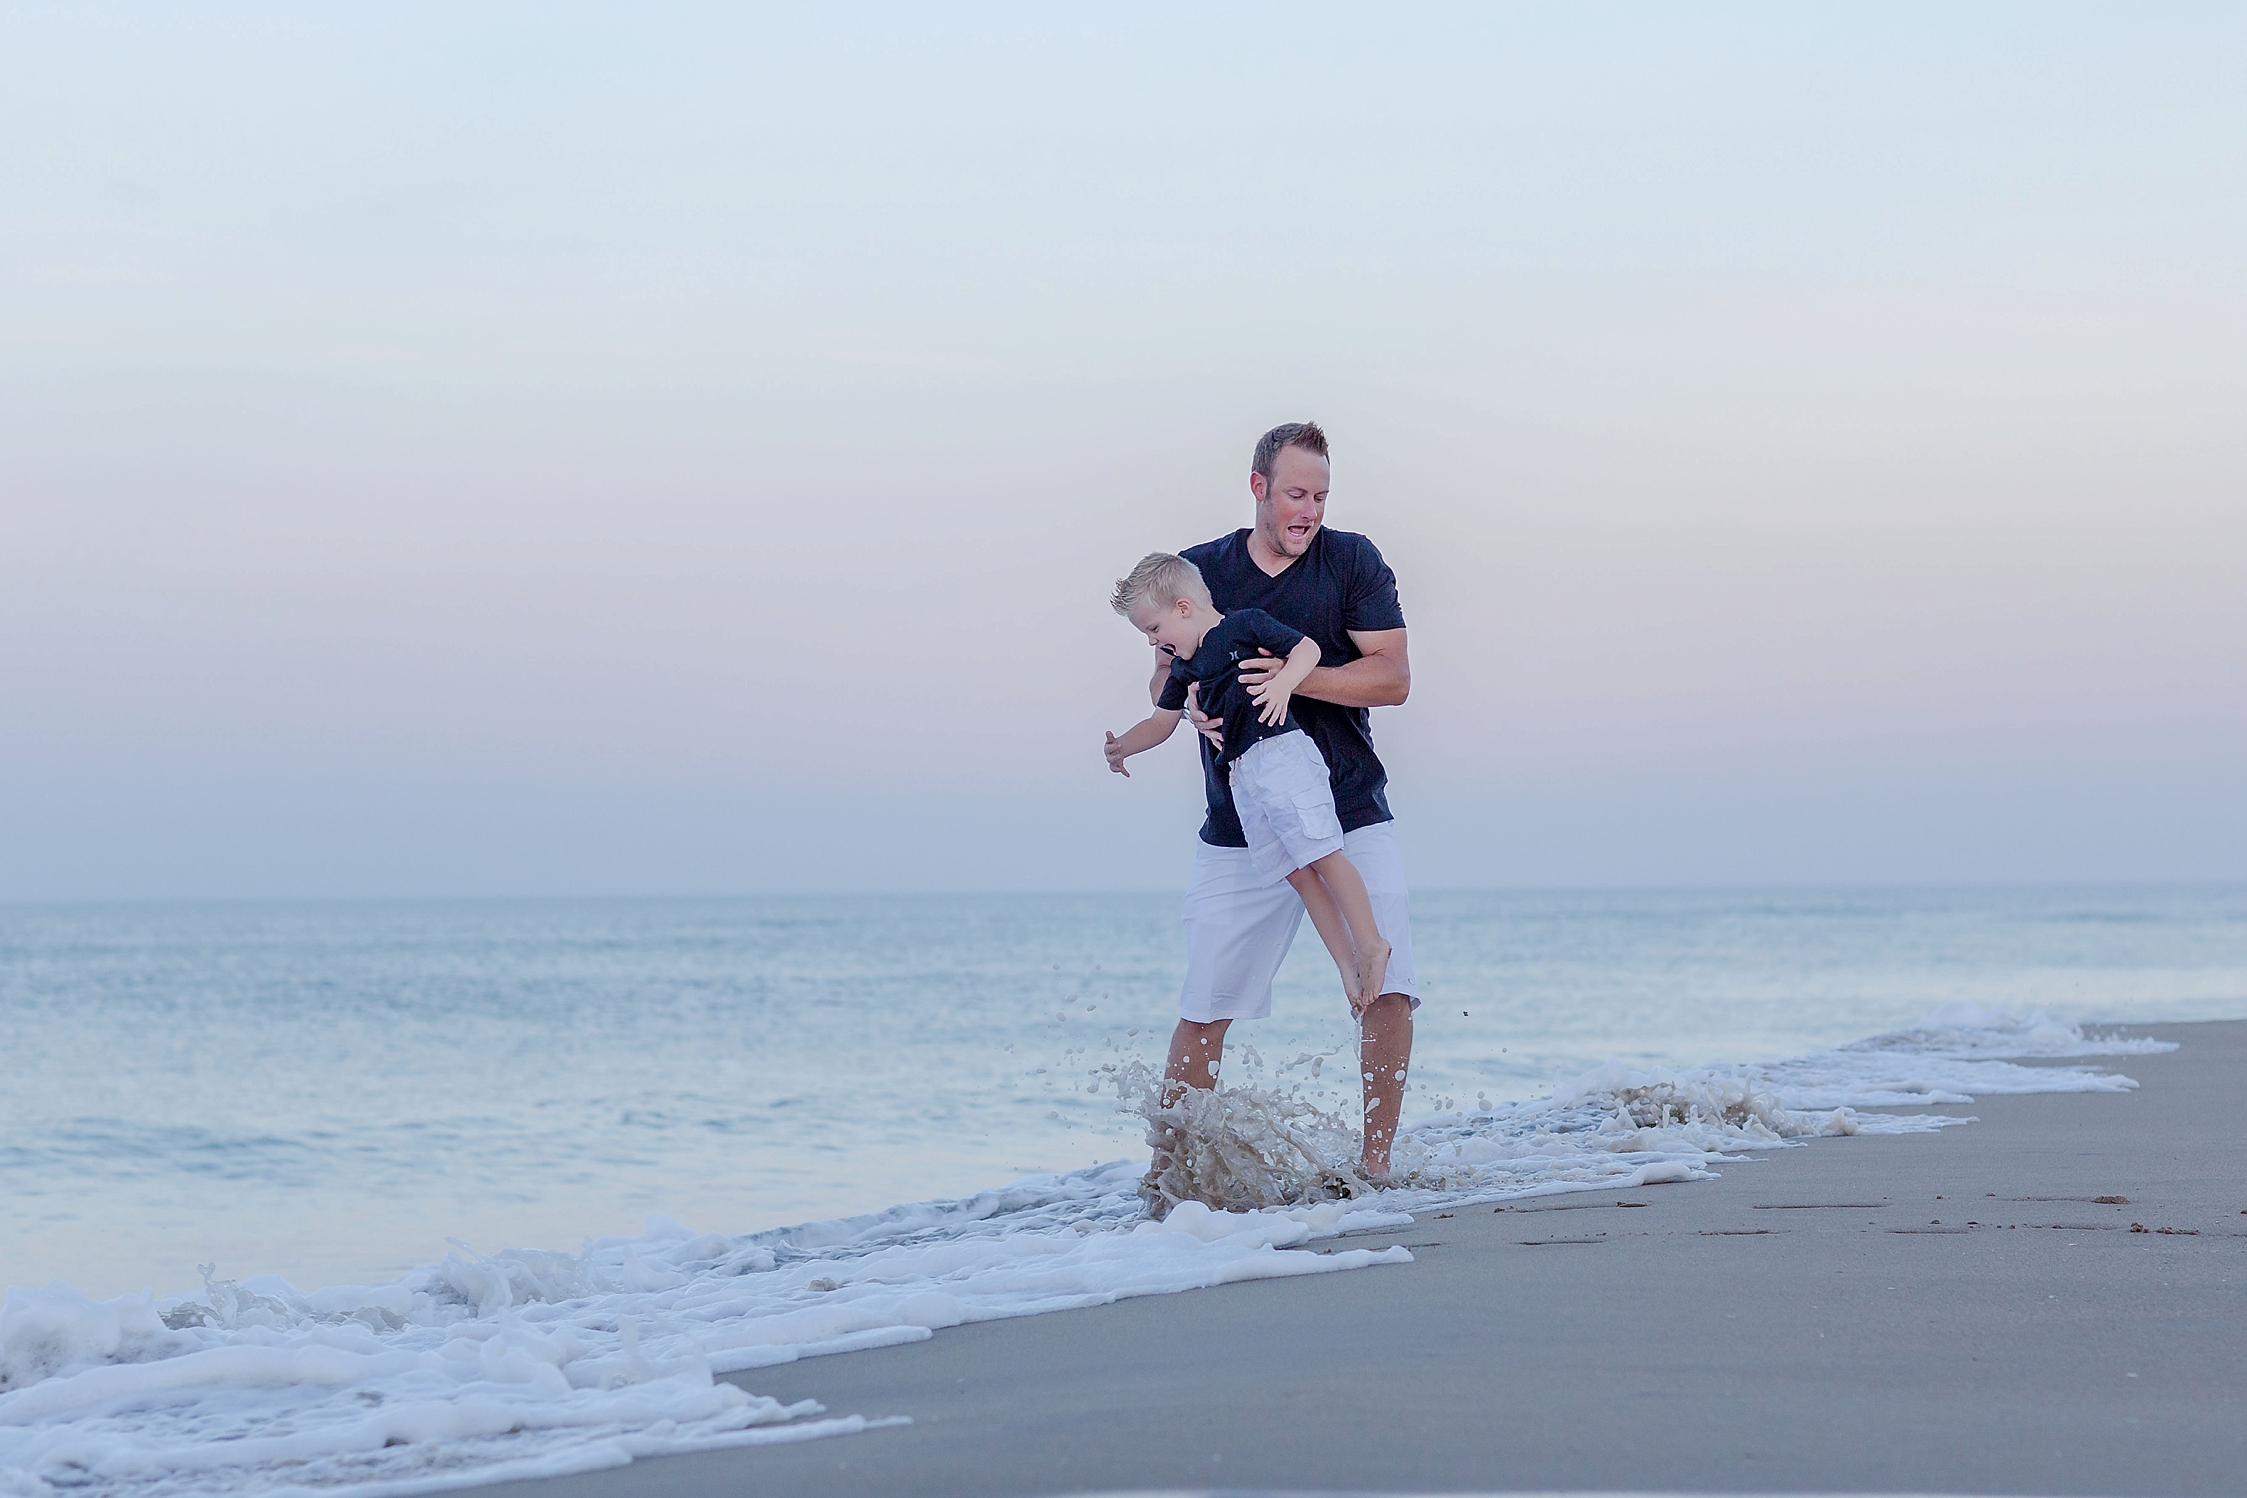 Beautiful Coastal Family maternity session with Brooke Tucker Photography